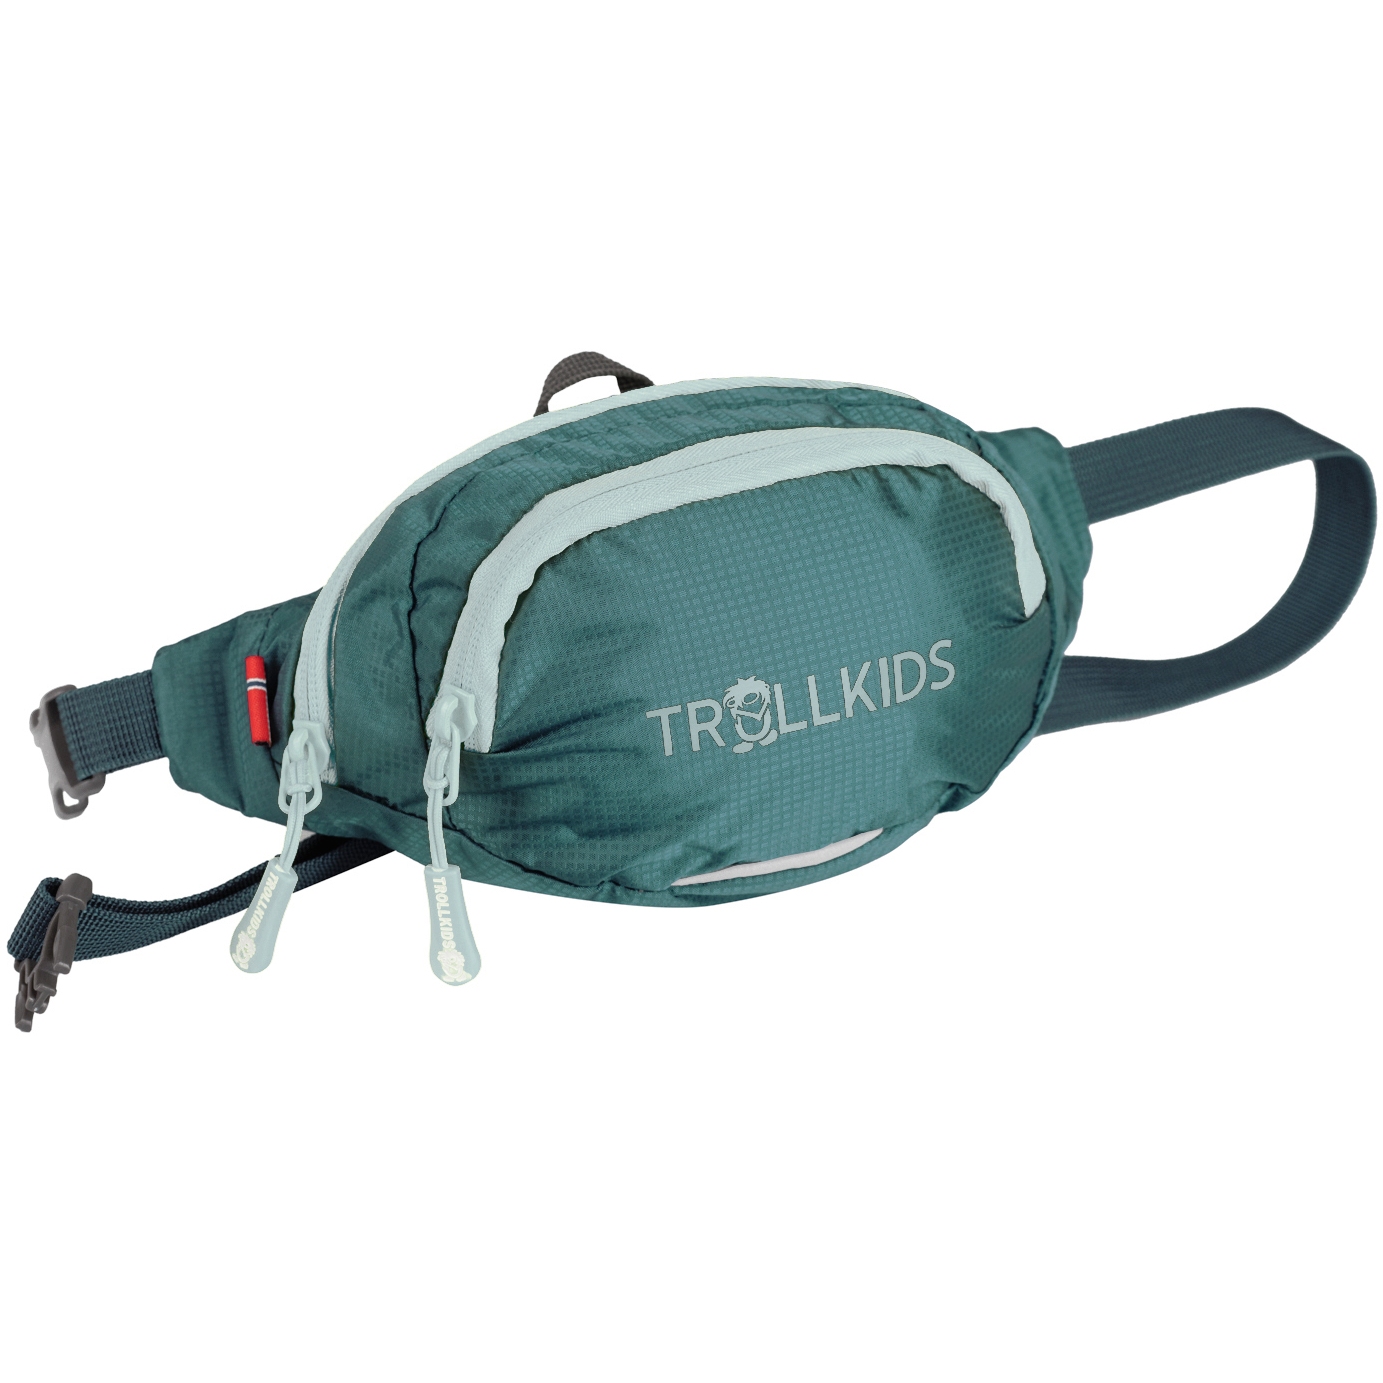 Produktbild von Trollkids Trolltunga Hüfttasche 1.2L Kinder - Teal/Aqua